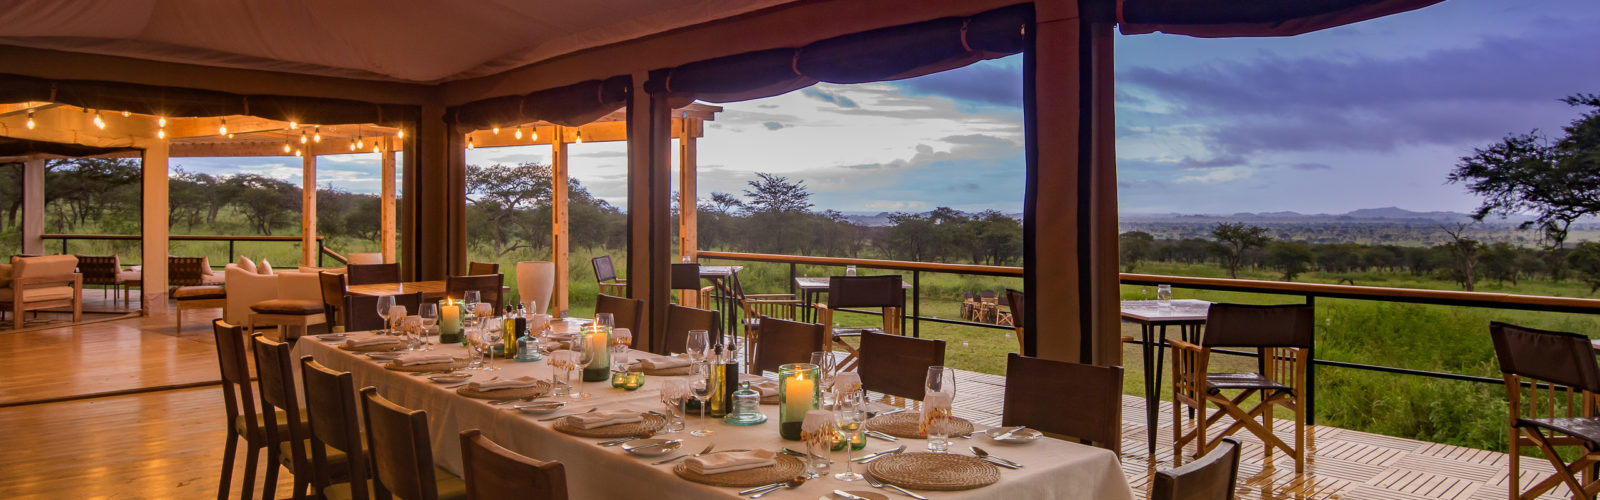 Dunia camp Tanzania dining room